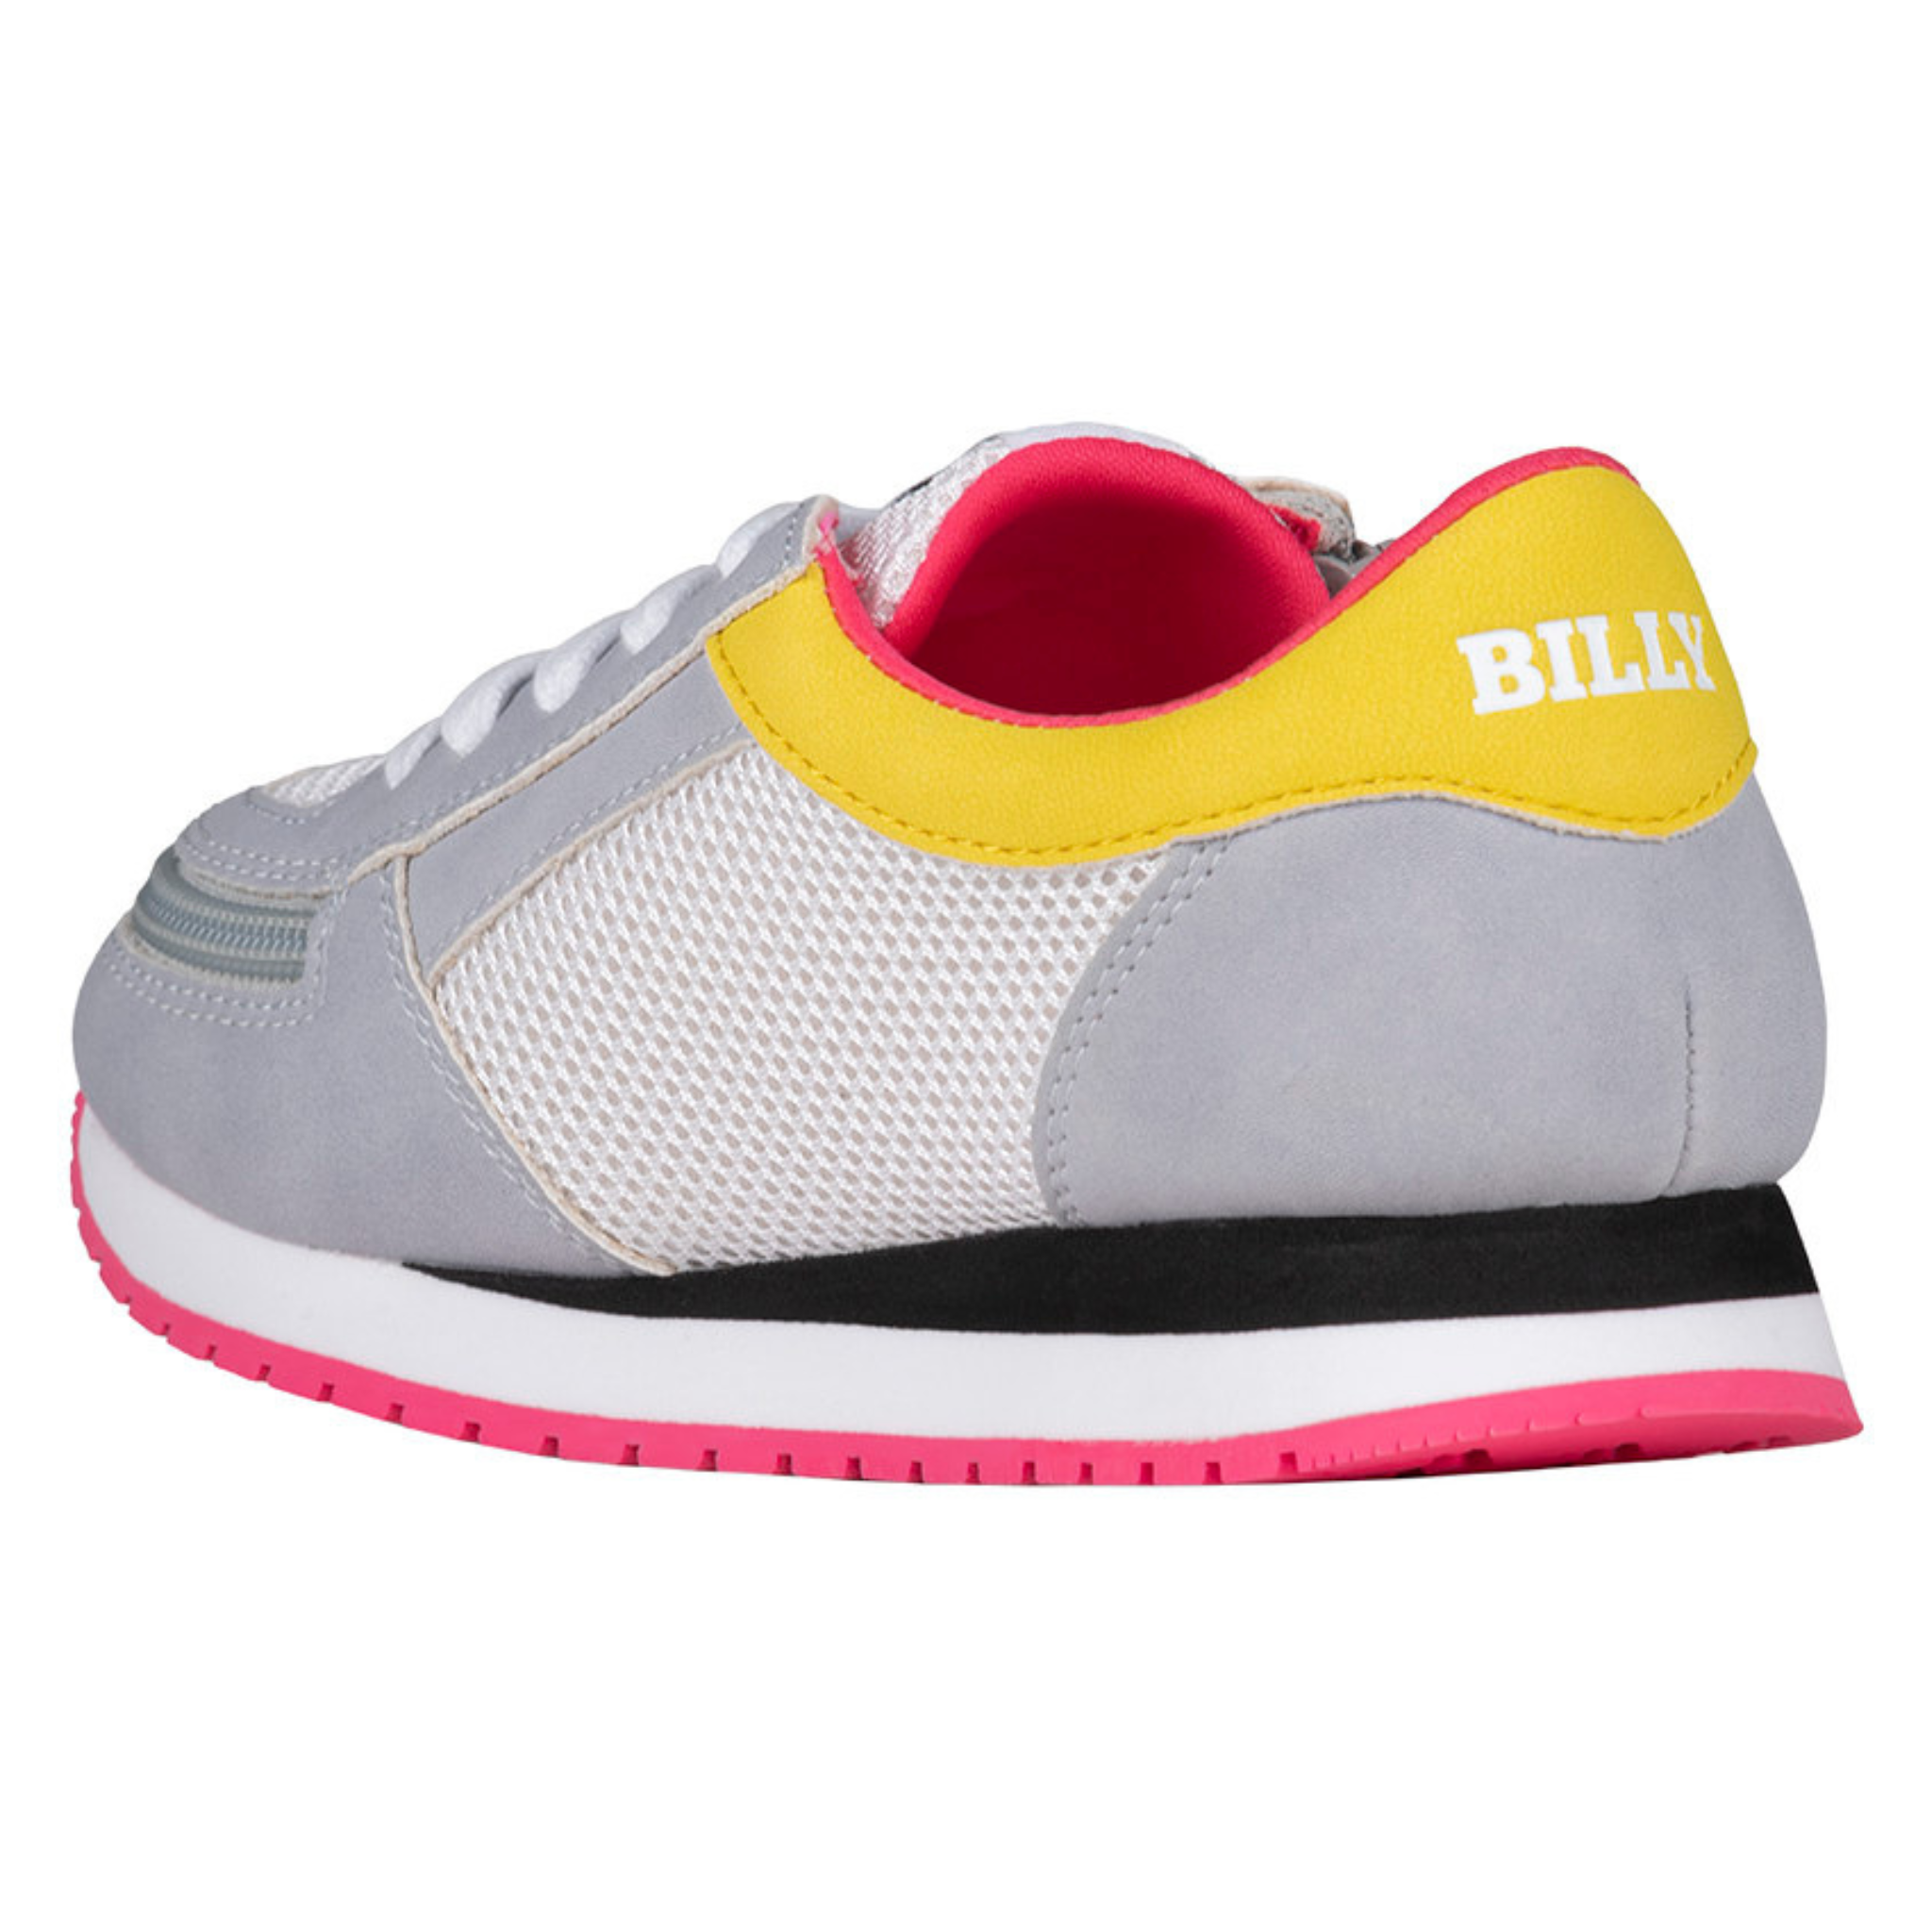 Billy Footwear (Kids) - Grey/ Pink Faux Suede Trainers